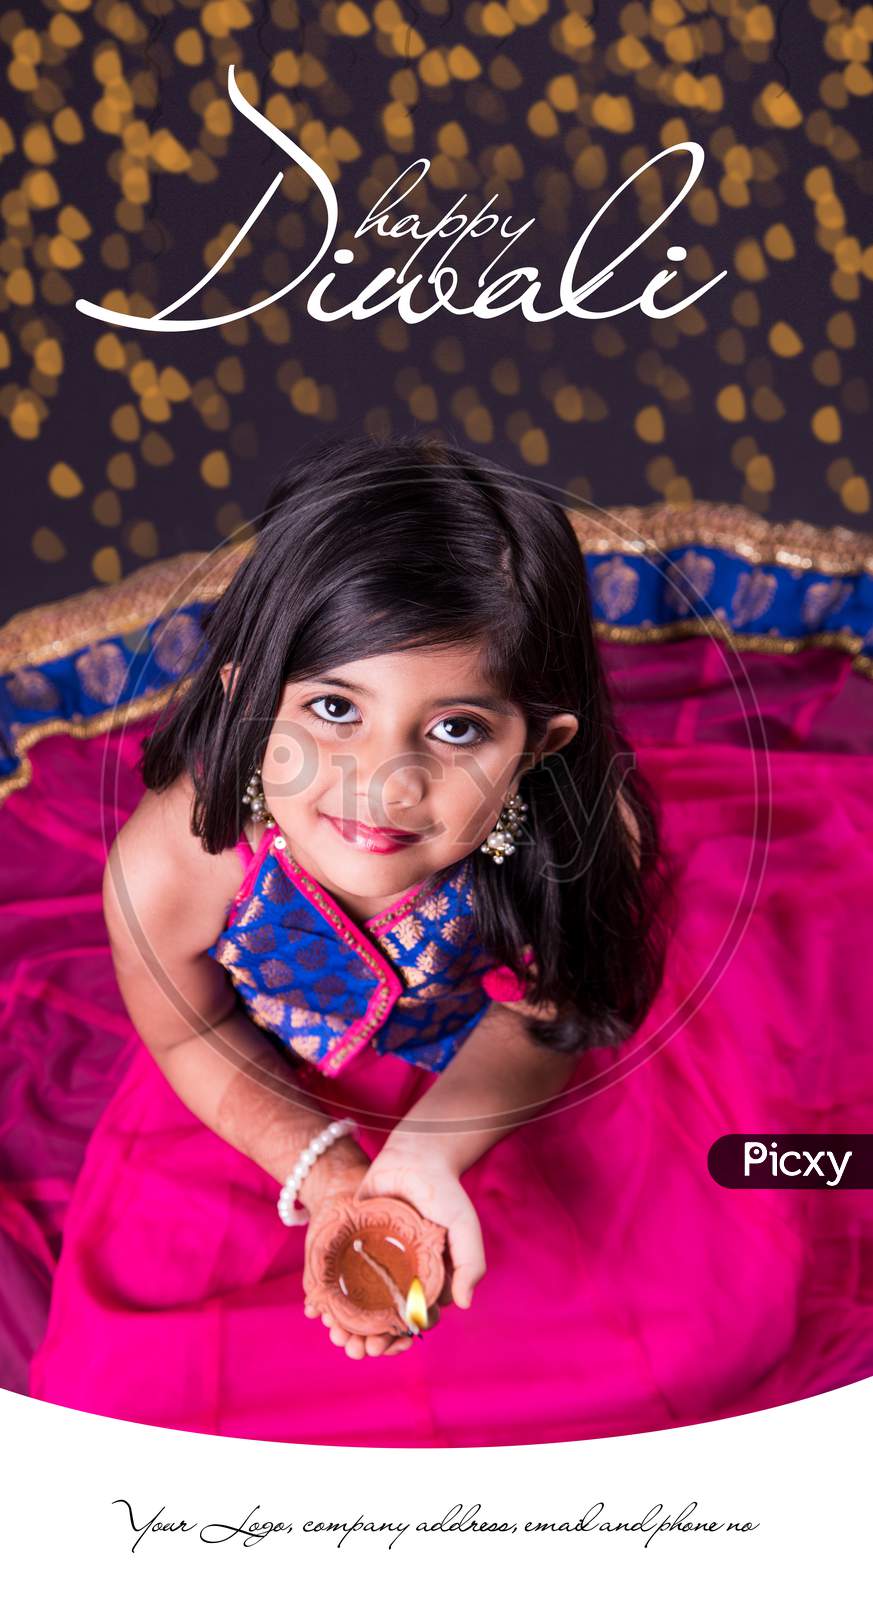 Diwali Greeting Card showing small Girl Holding Diya or oil lamp